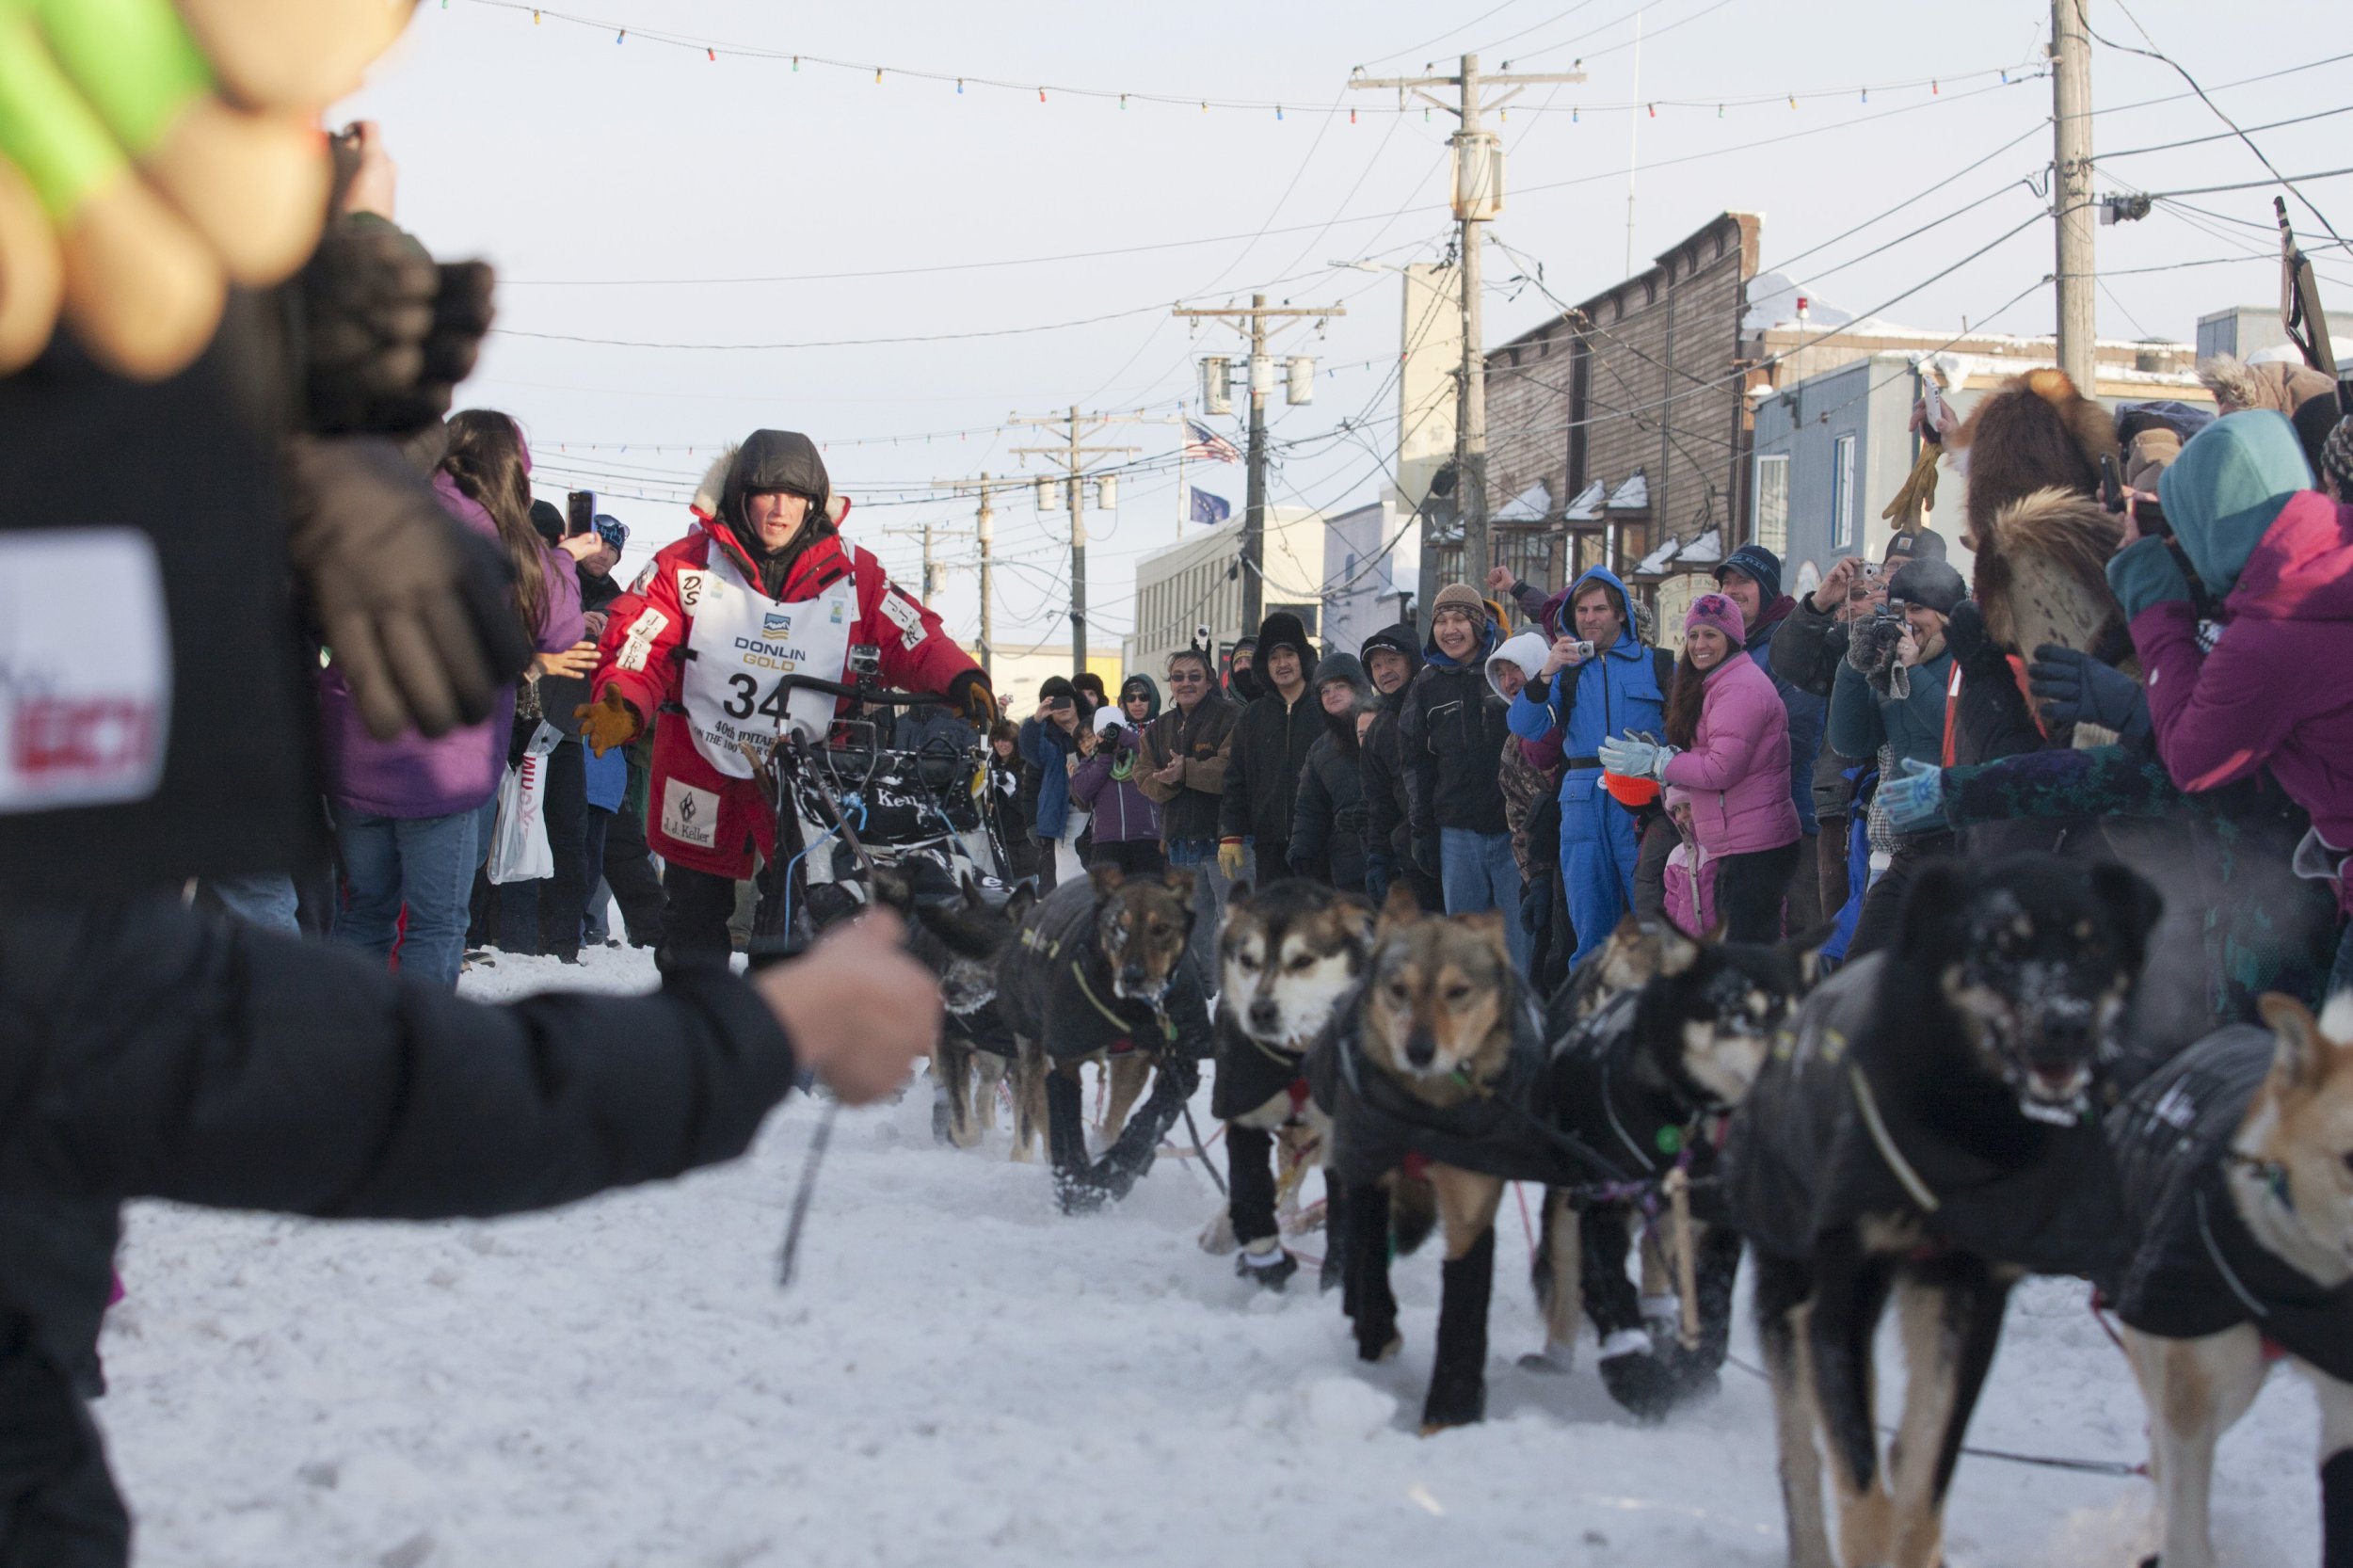 The 2012 Iditarod winnder, Dallas Seavey